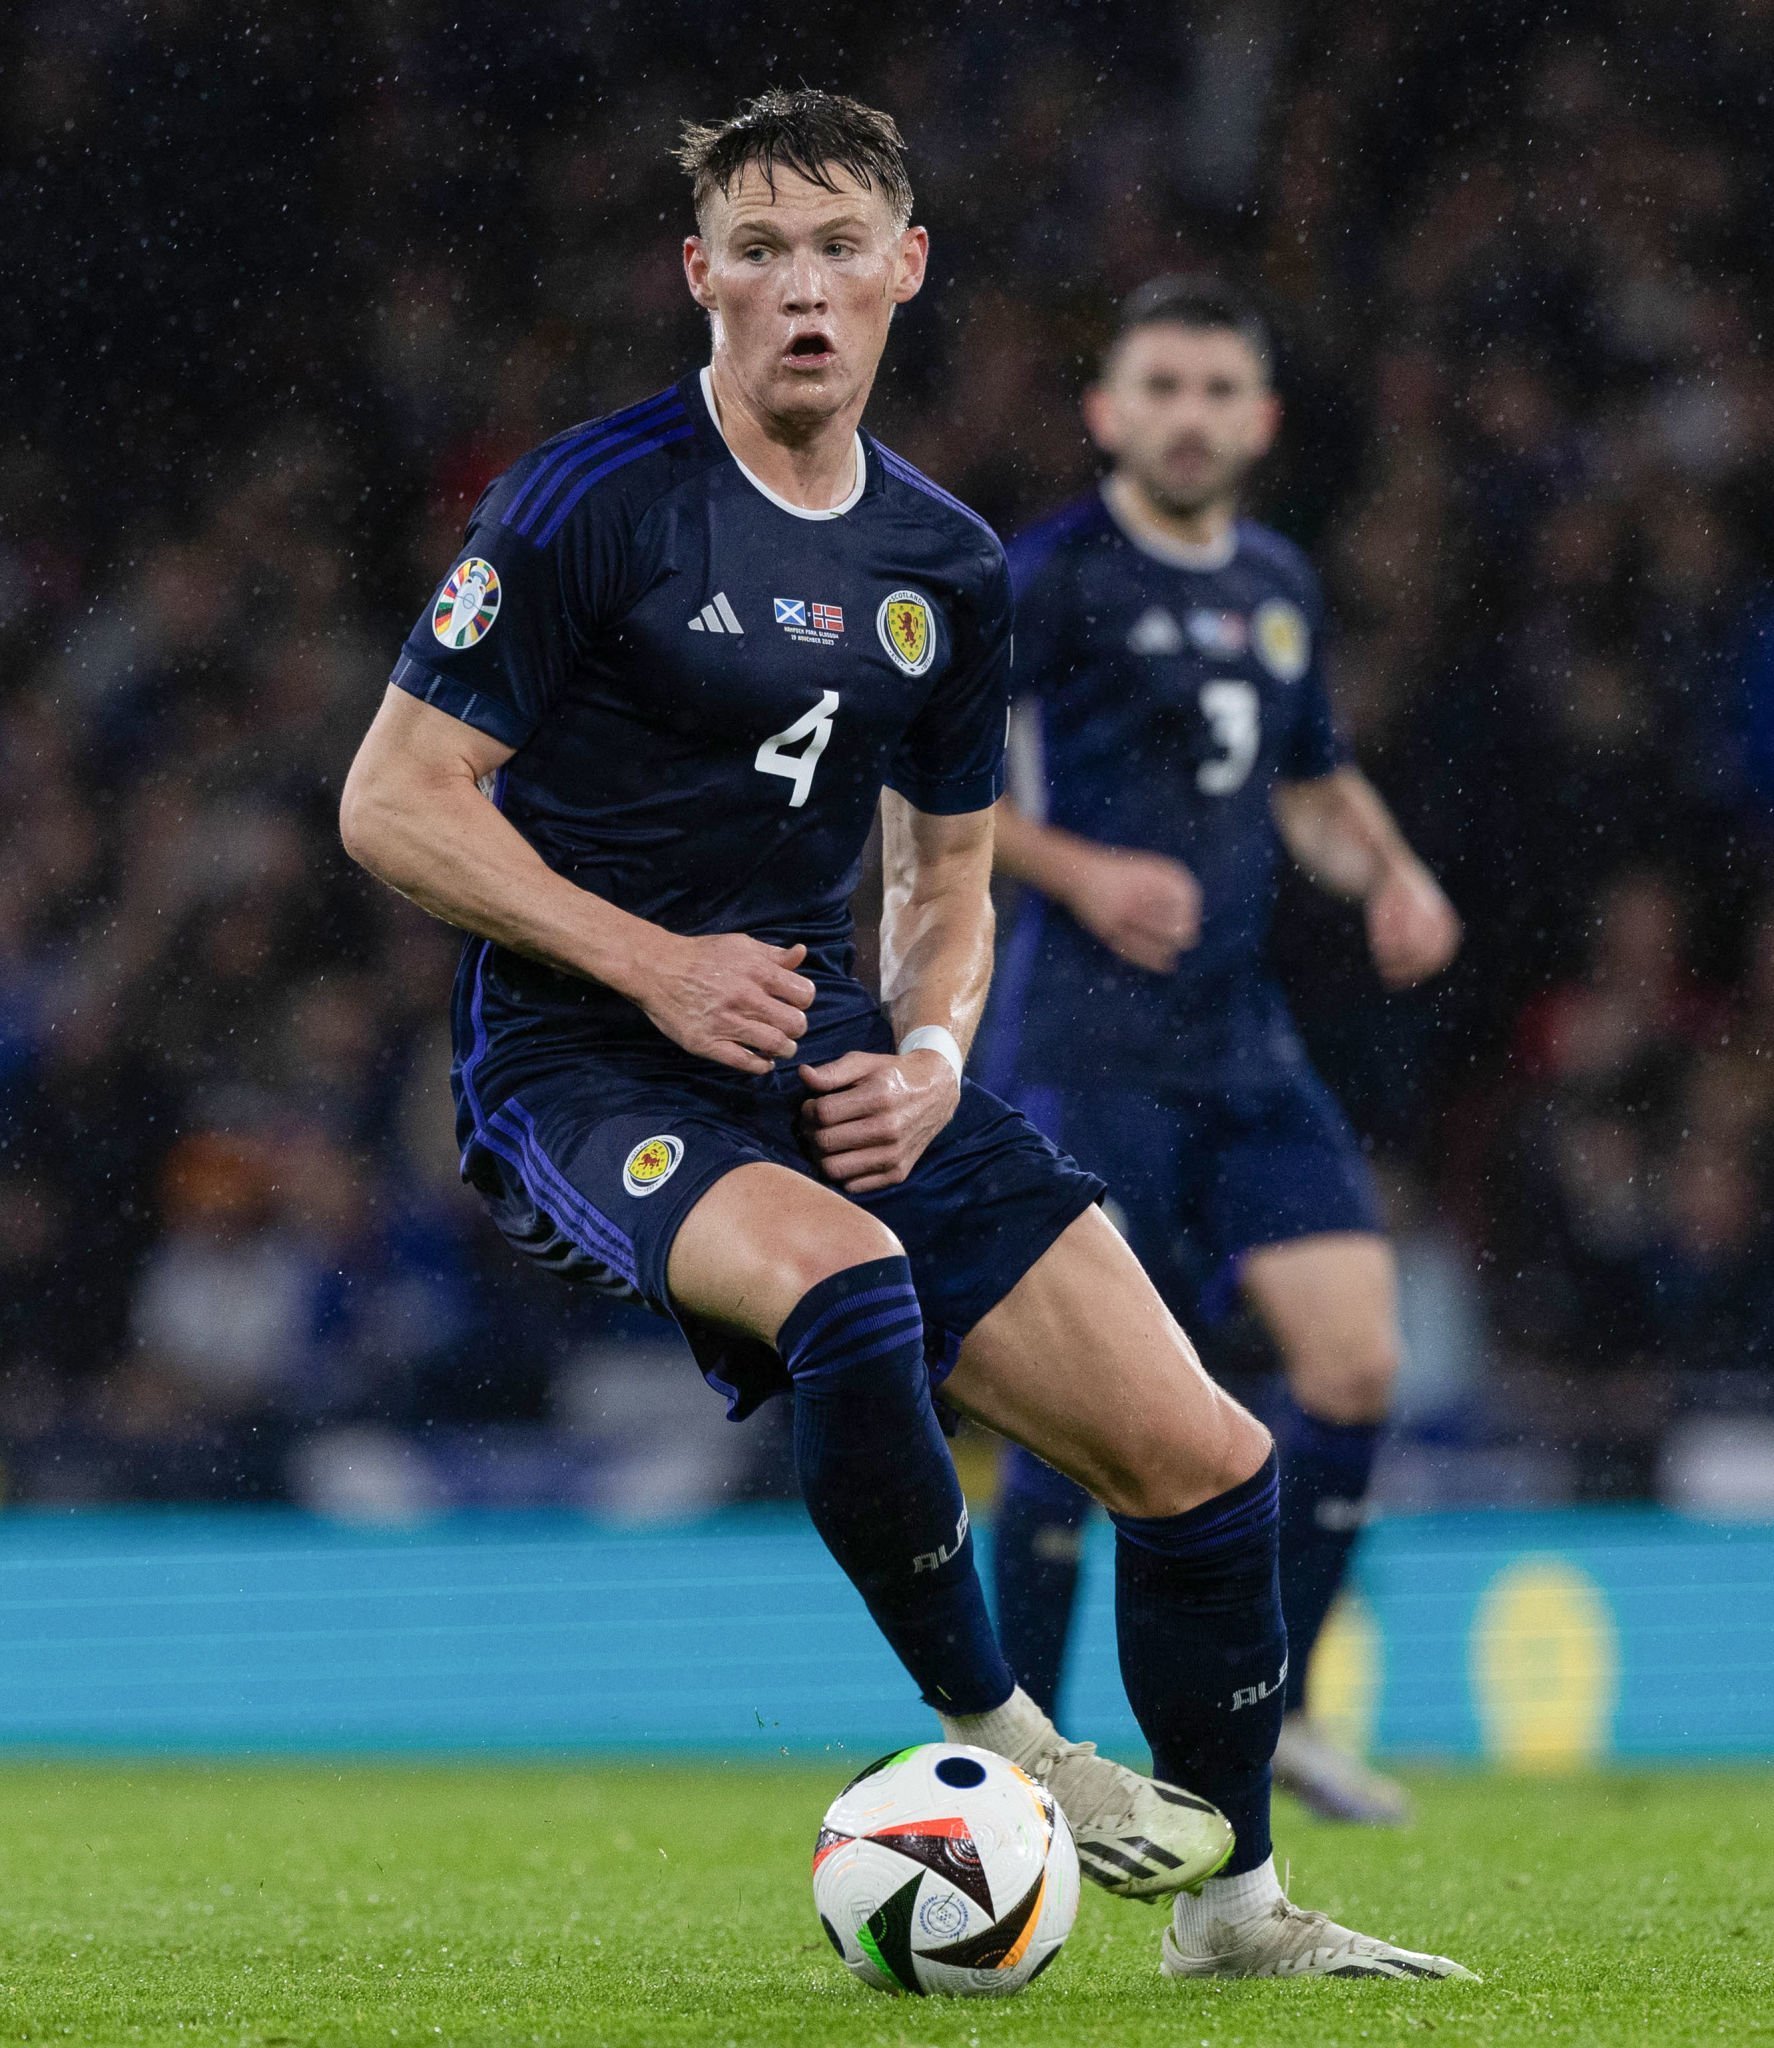 UtdDistrict on X: "Scott McTominay played 90 minutes as Scotland drew 3-3 with Norway 🏴󠁧󠁢󠁳󠁣󠁴󠁿 https://t.co/4qgKjzhoeg" / X